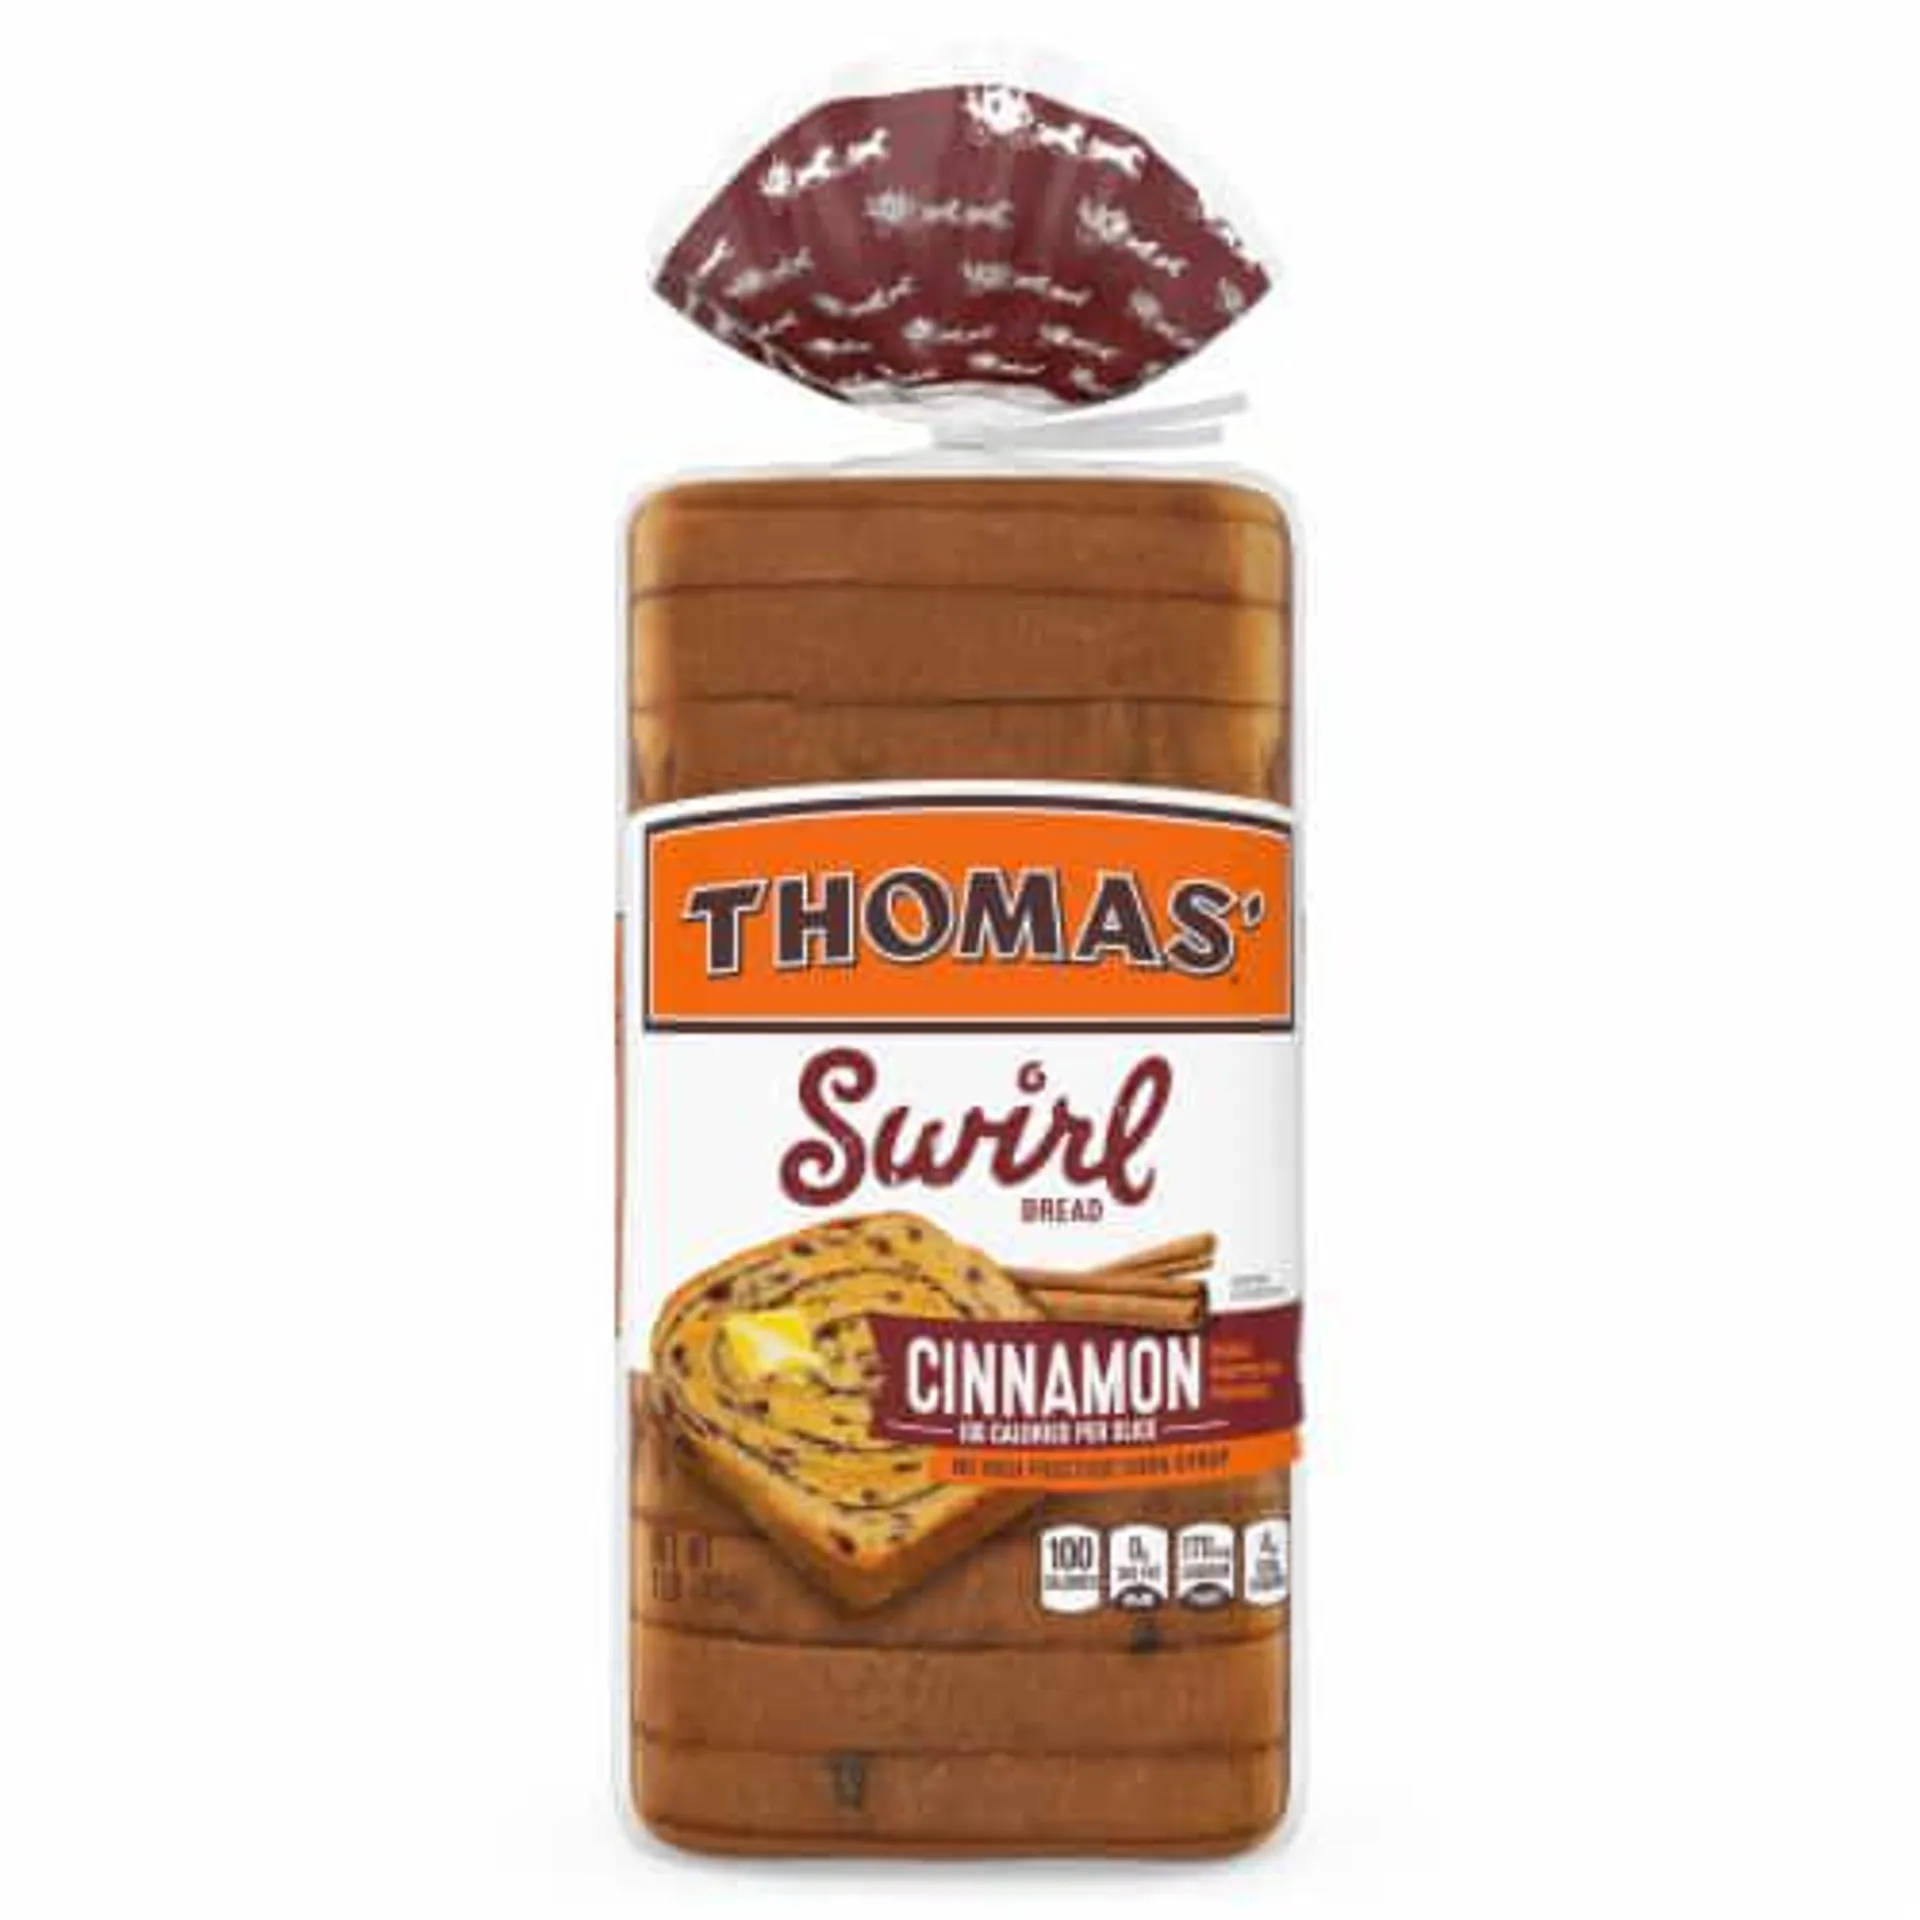 Thomas' Cinnamon Swirl Bread